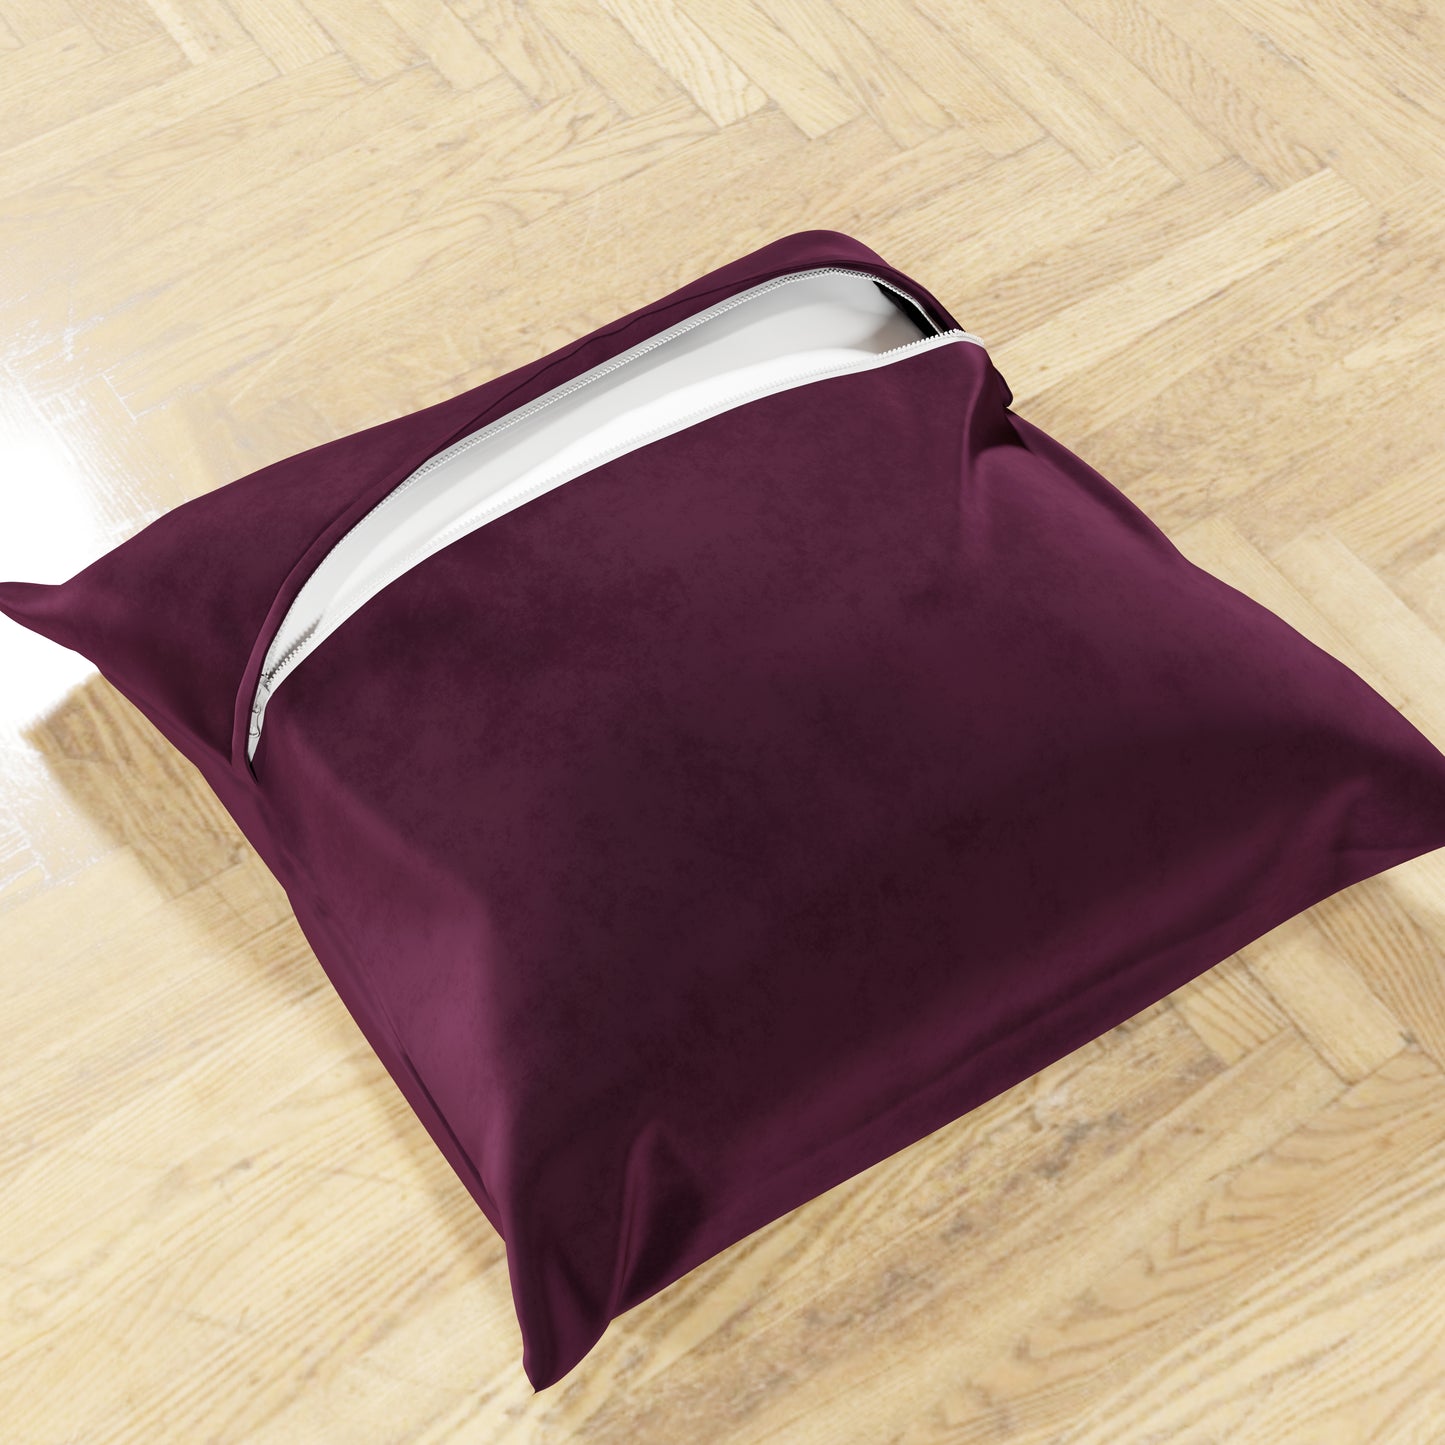 Velvet Cushions, Sofa Cushion Covers, Furnishing Cushions 2pcs Plum